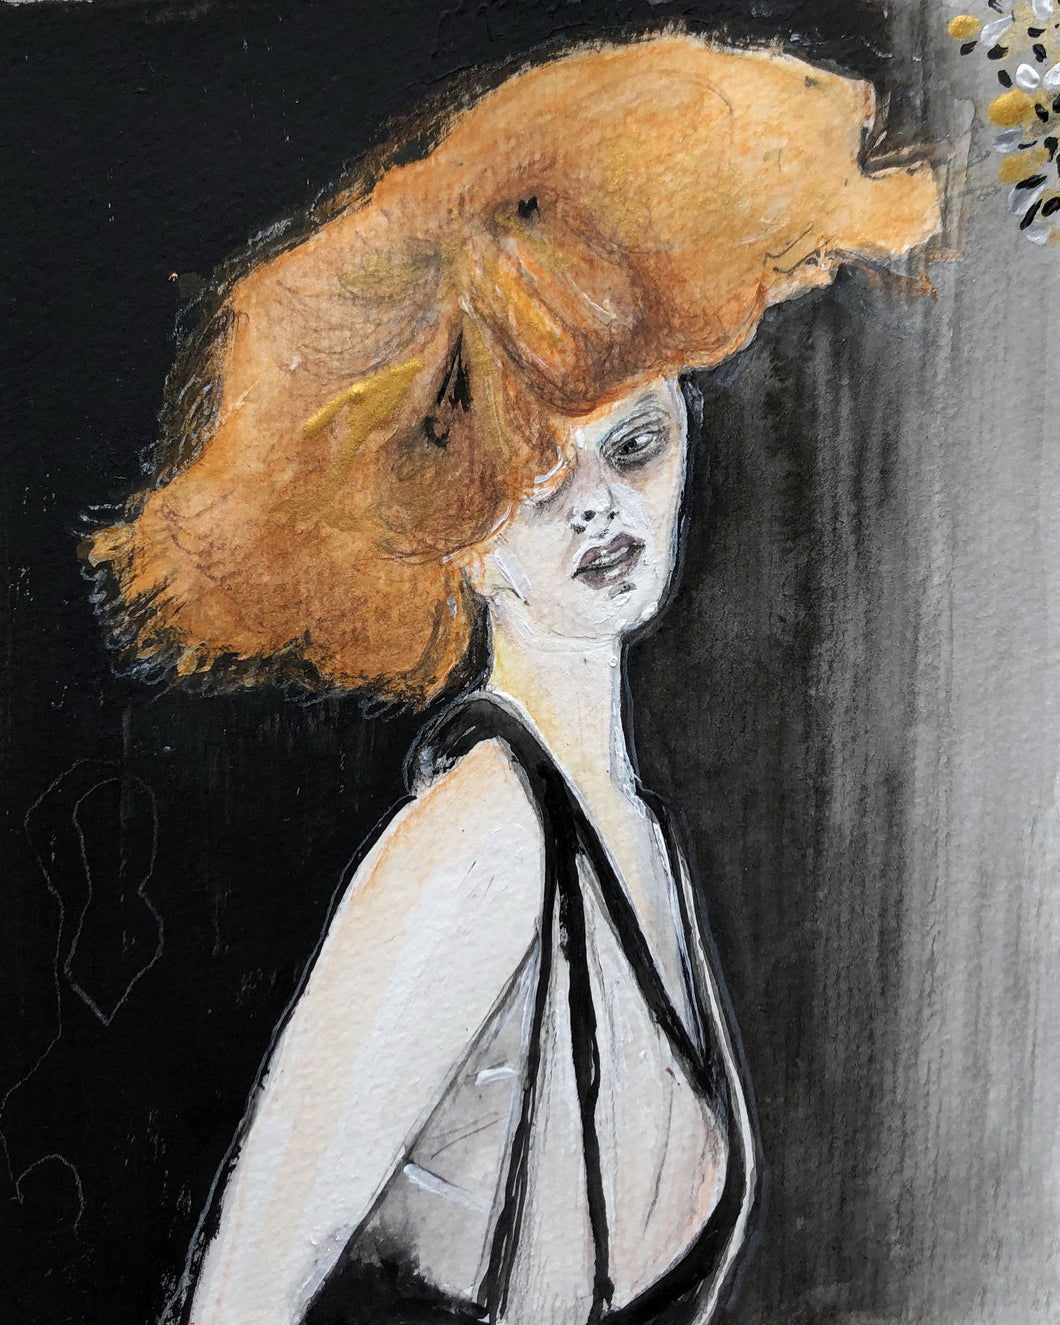 MAISON MARGIELA - Artisanal S/S '24 Paris - red haired figure painting